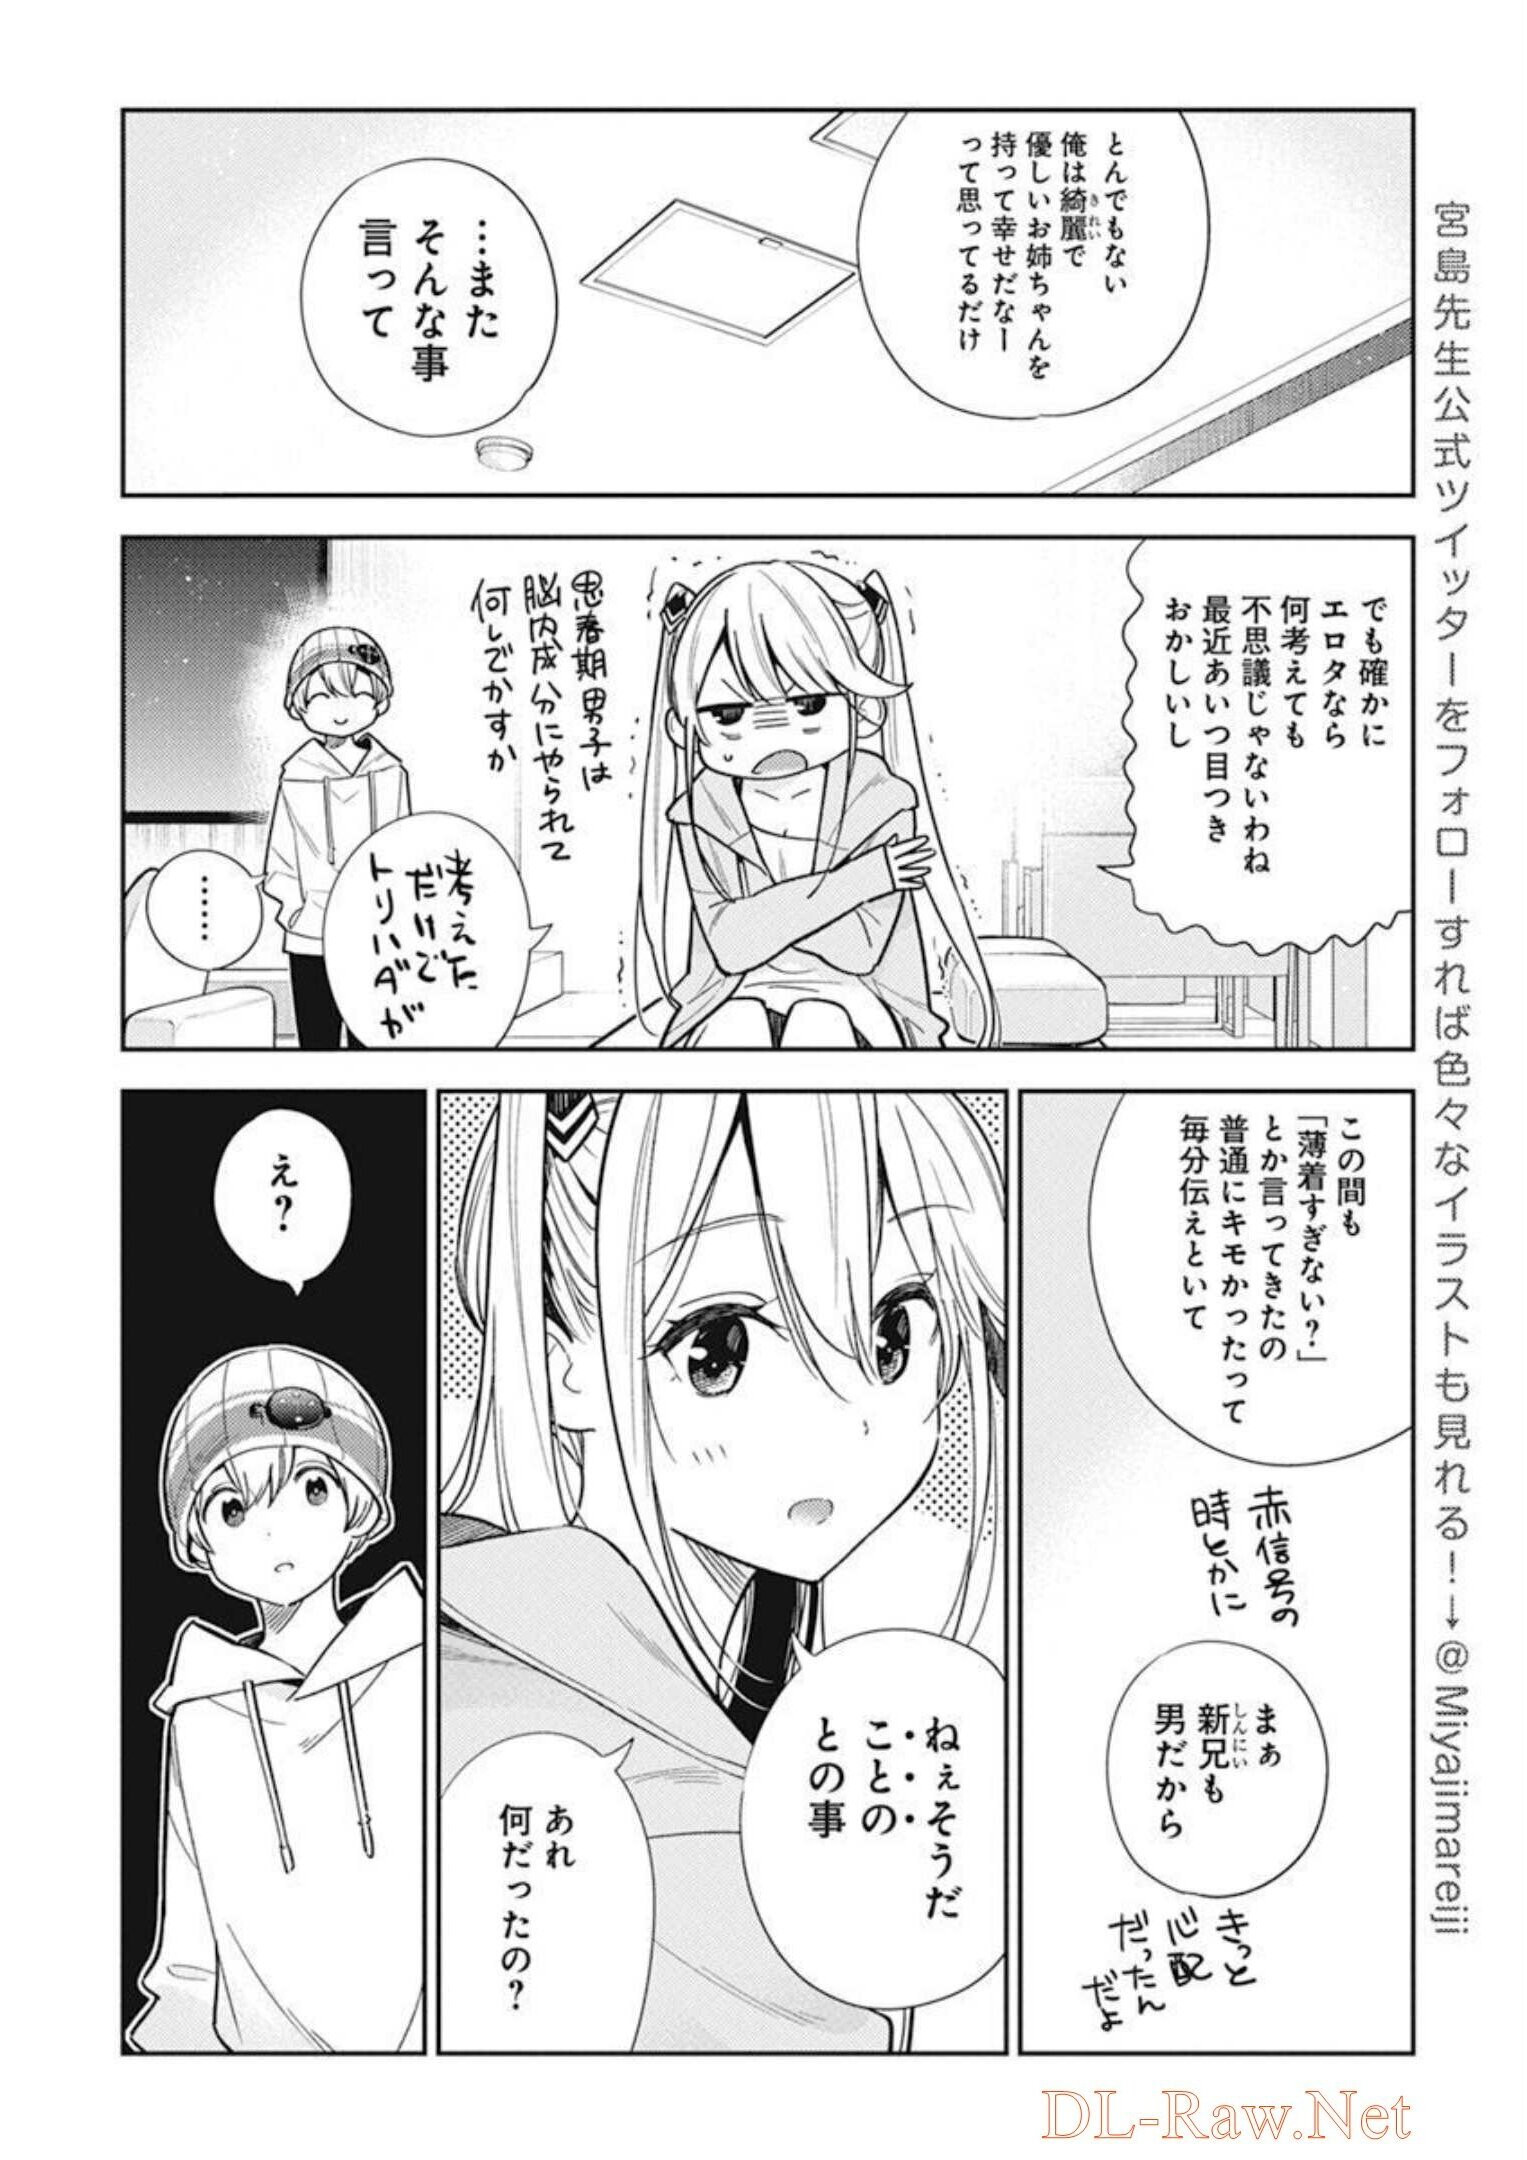 Shiunji-ke no Kodomotachi (Children of the Shiunji Family) - Chapter 03 - Page 5